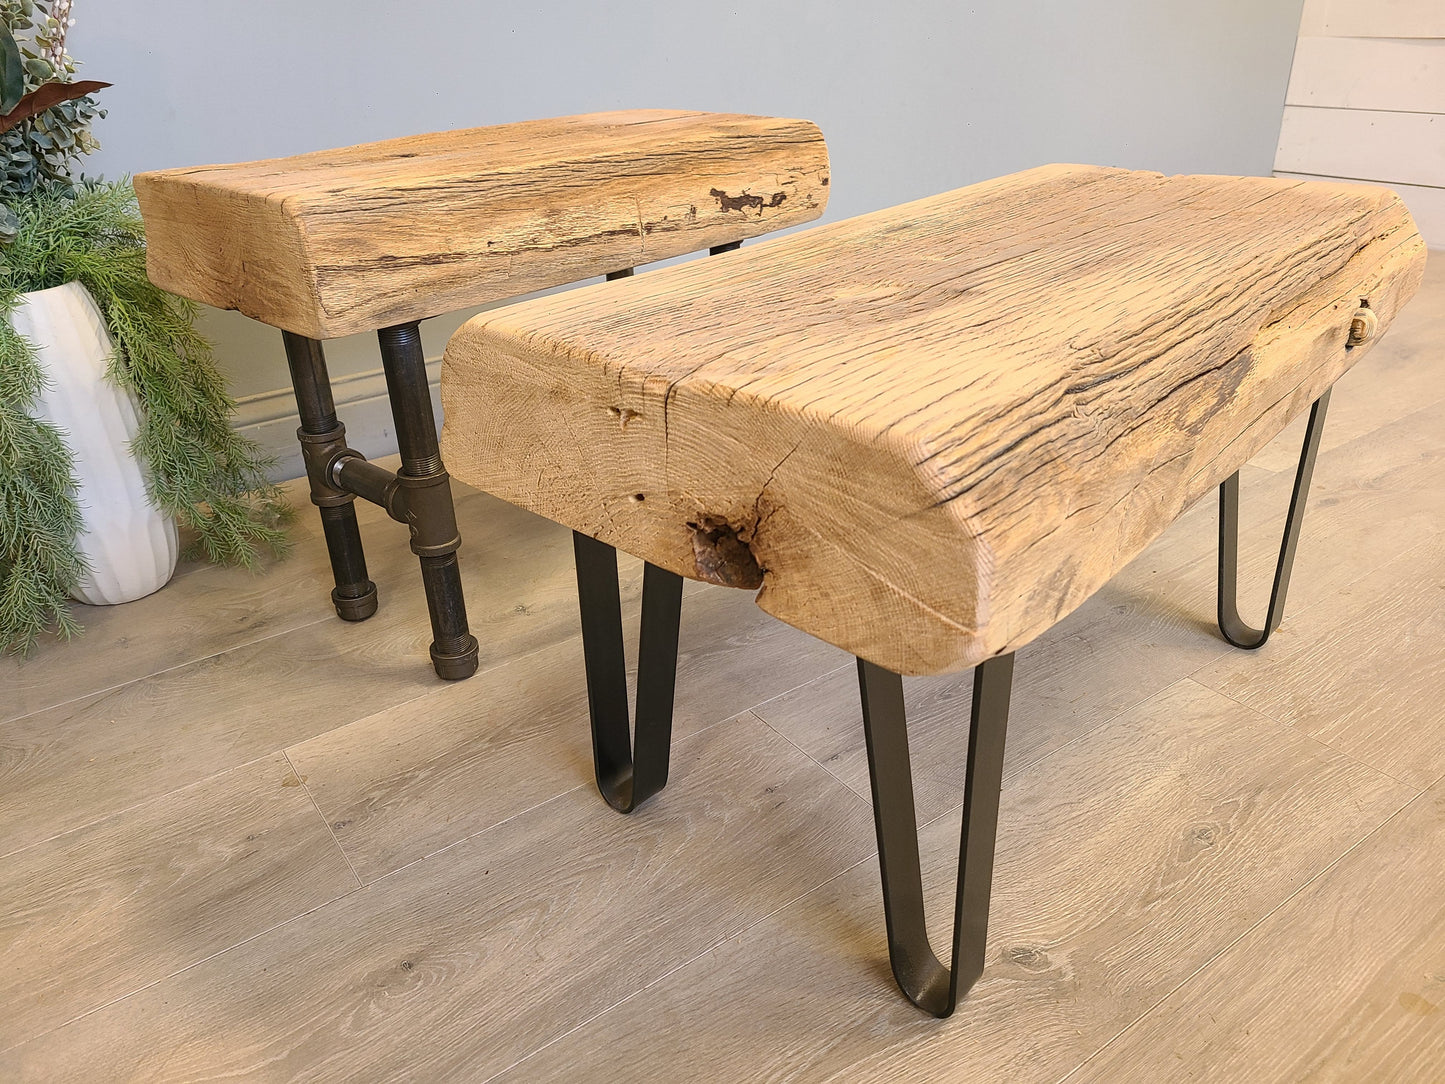 Oak Barn Beam Bench, 30", Reclaimed Wood Coffee Table D